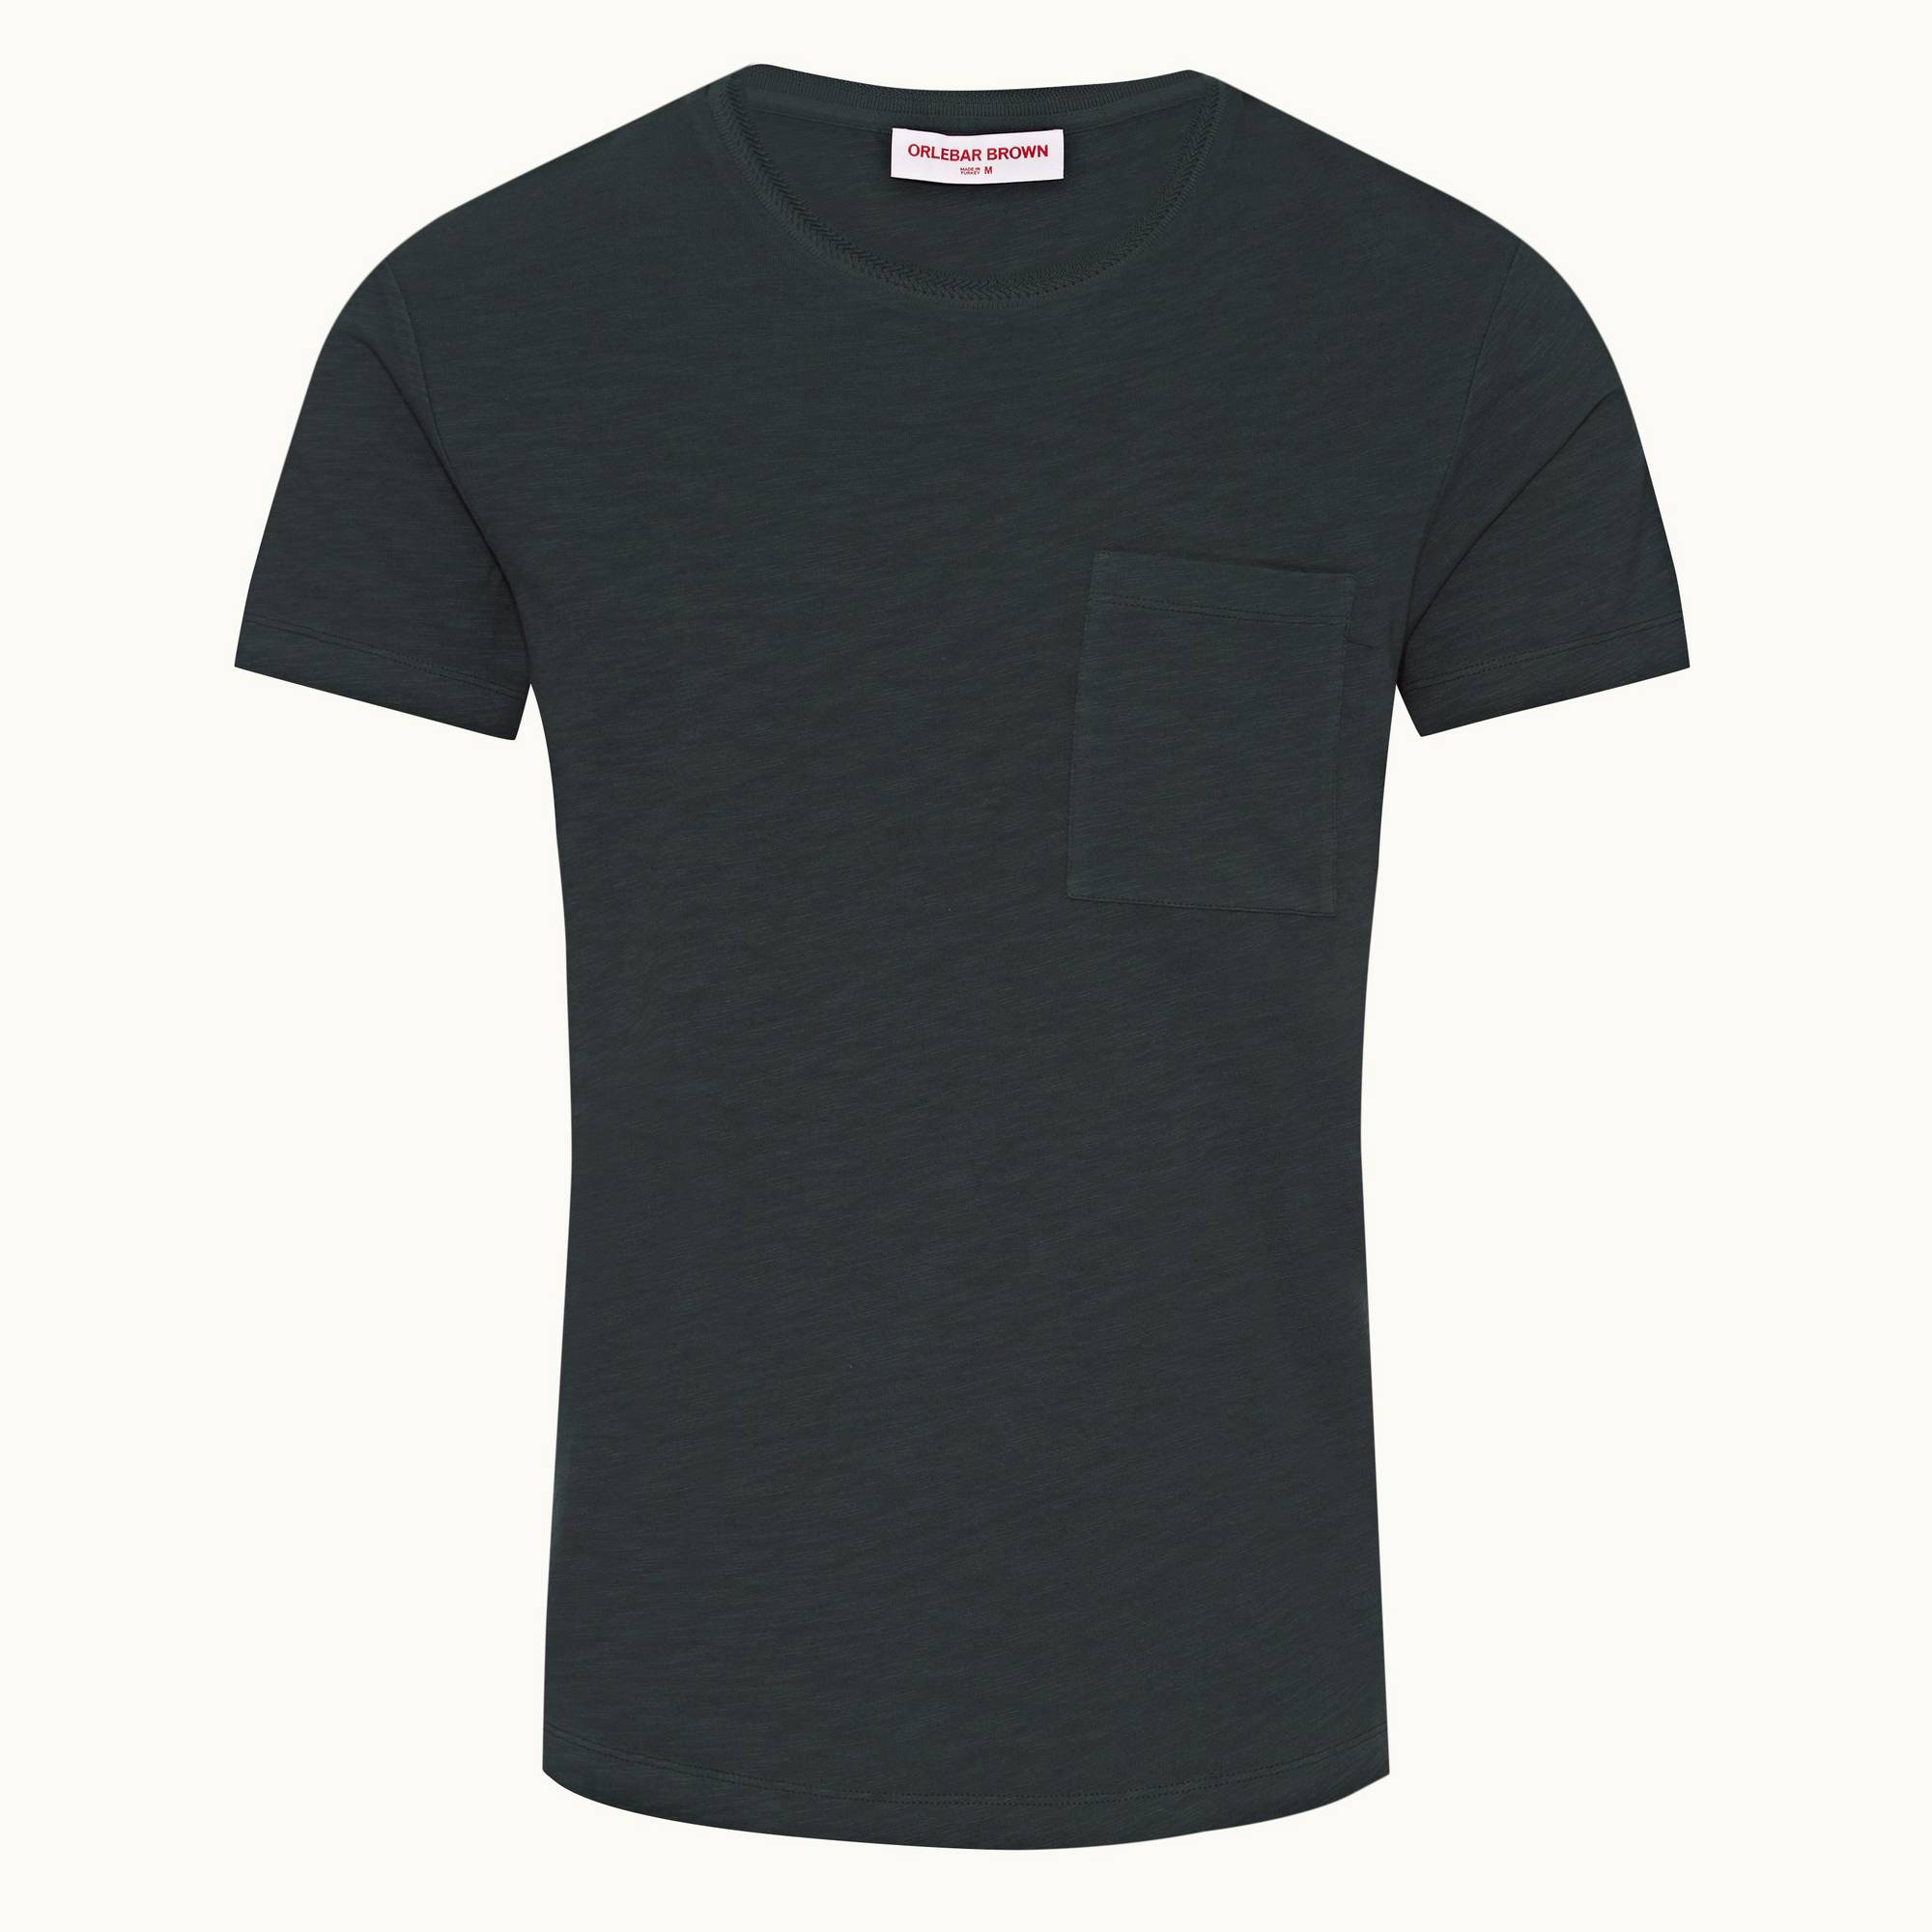 Ob Classic - Mens Shadow Classic Fit Garment-Dye Organic Cotton T-Shirt